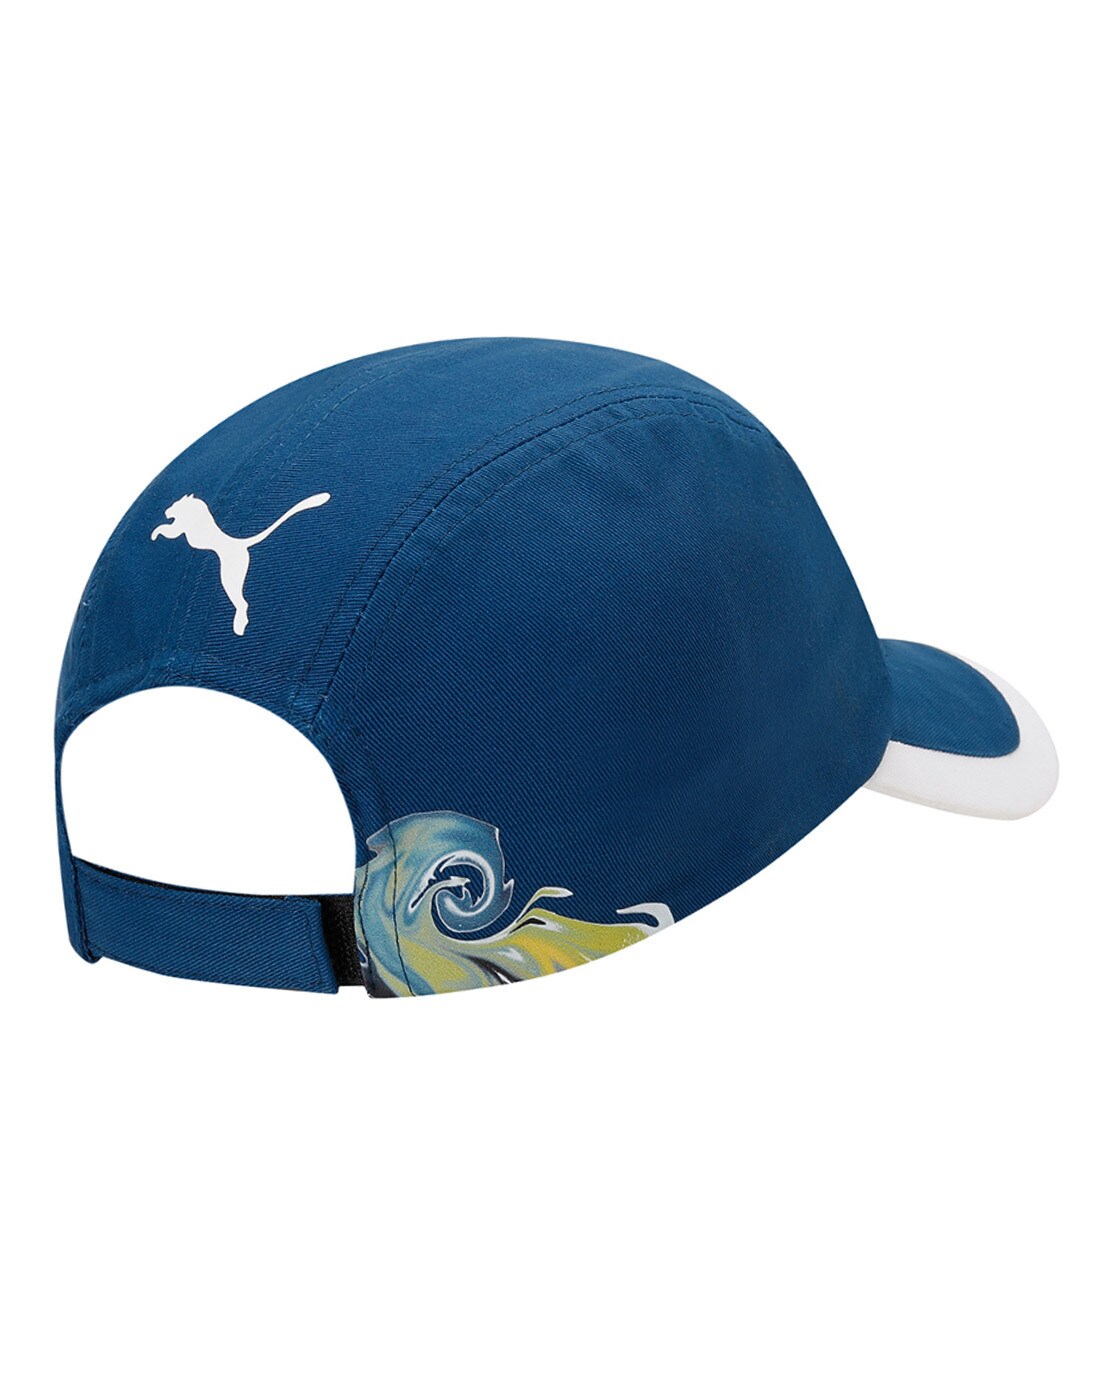 Blue Caps & Hats for Men by Puma Online | Ajio.com